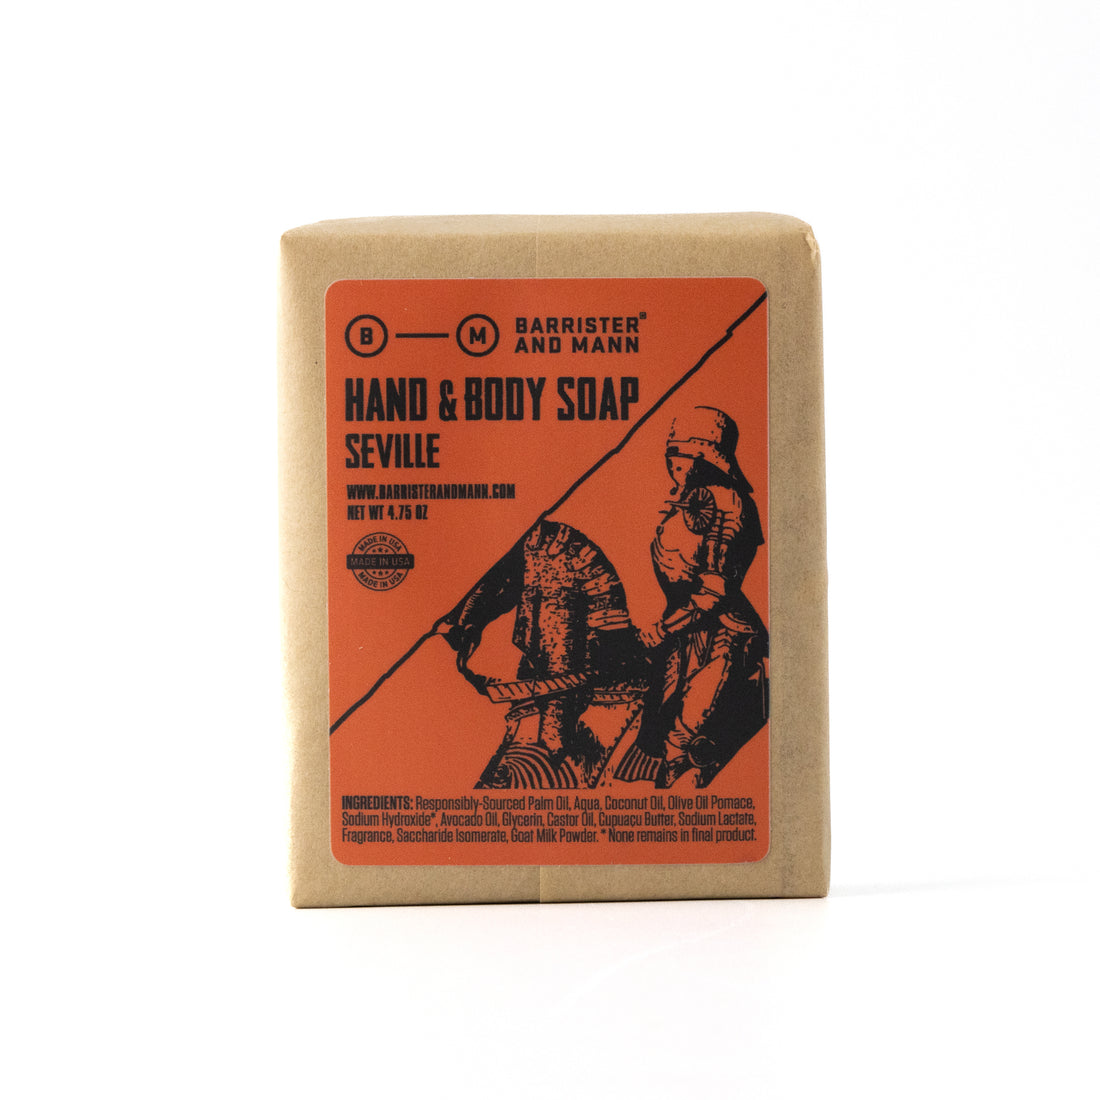 Hand & Body Soap: Seville - Barrister and Mann LLC